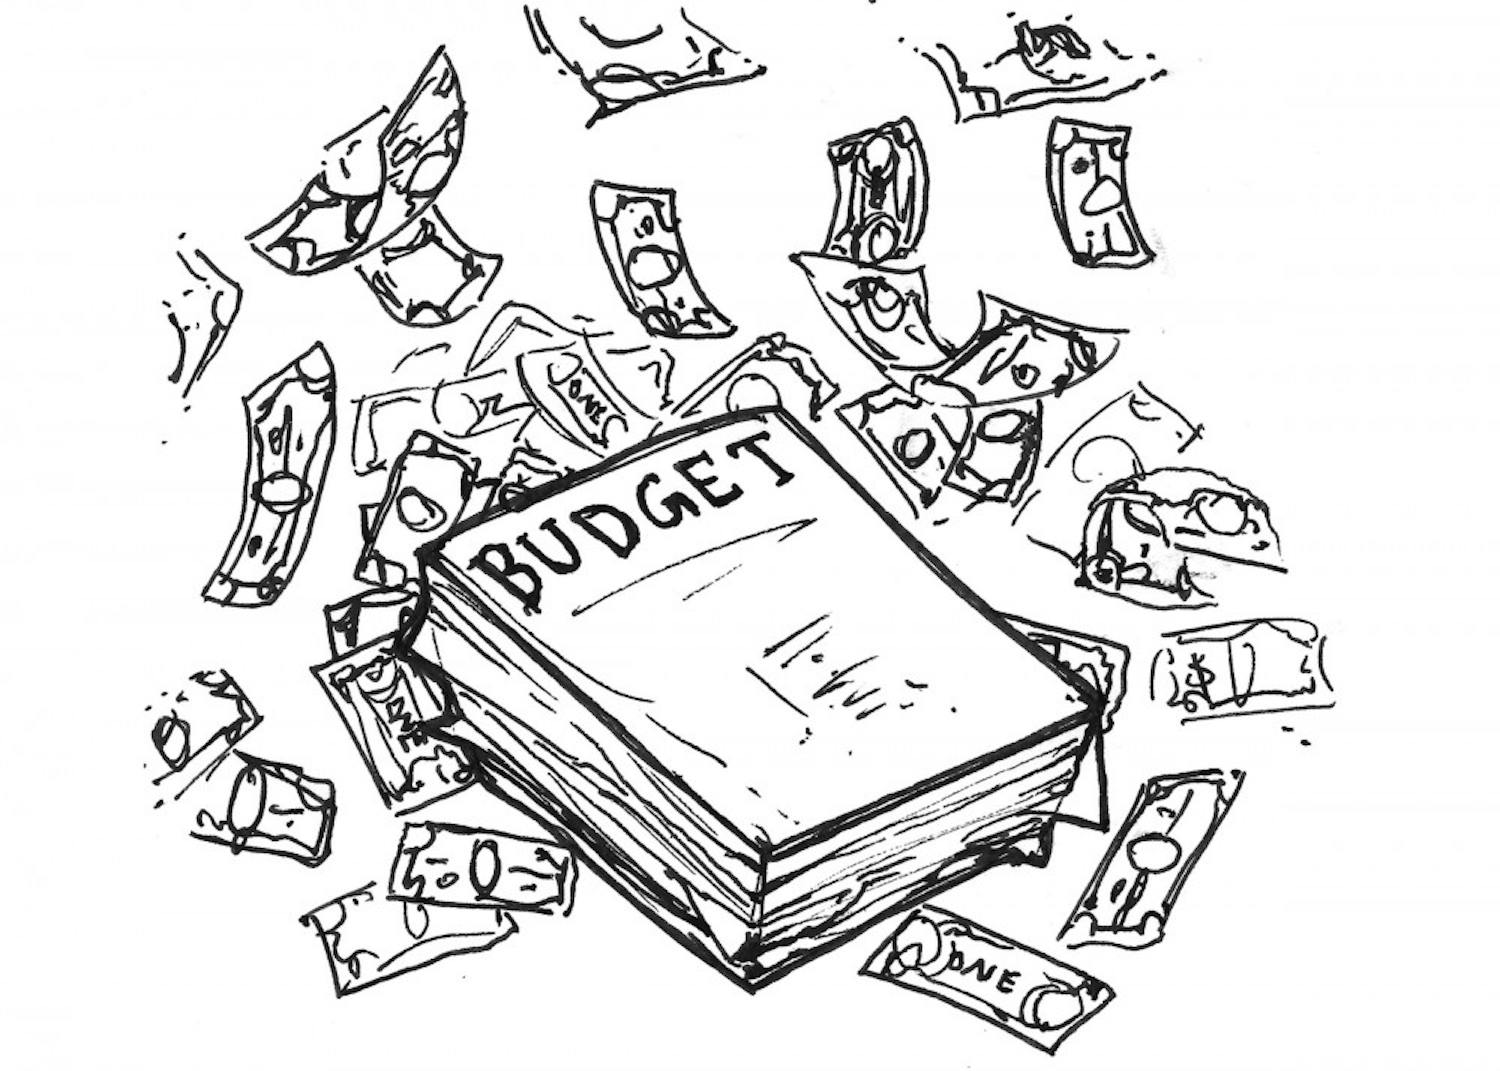 budget_illustration-1